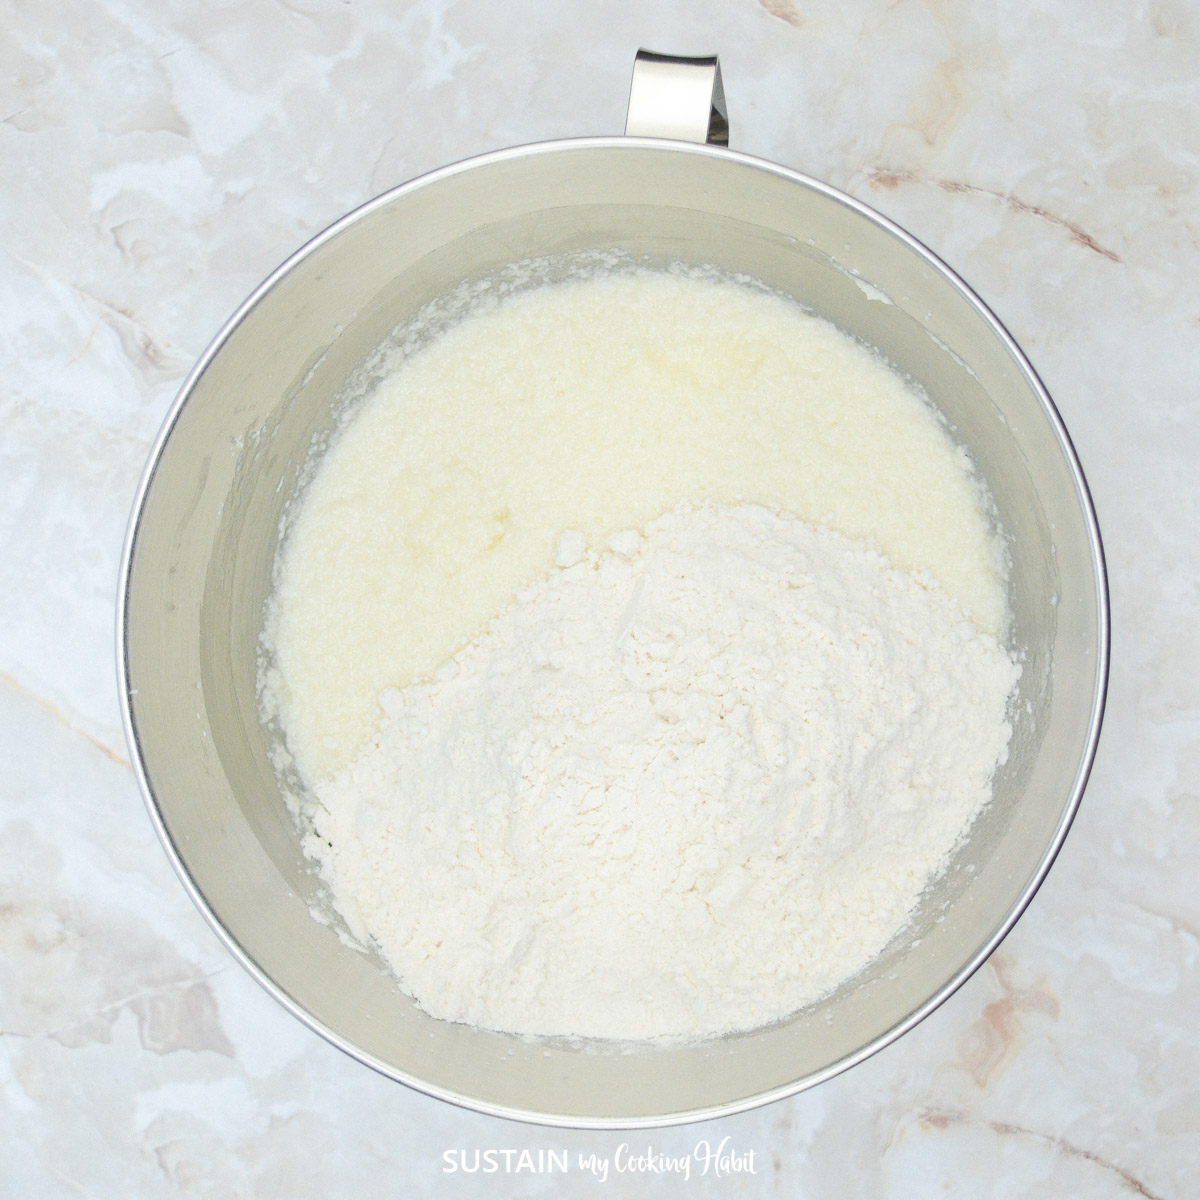 Adding flour to a bowl.